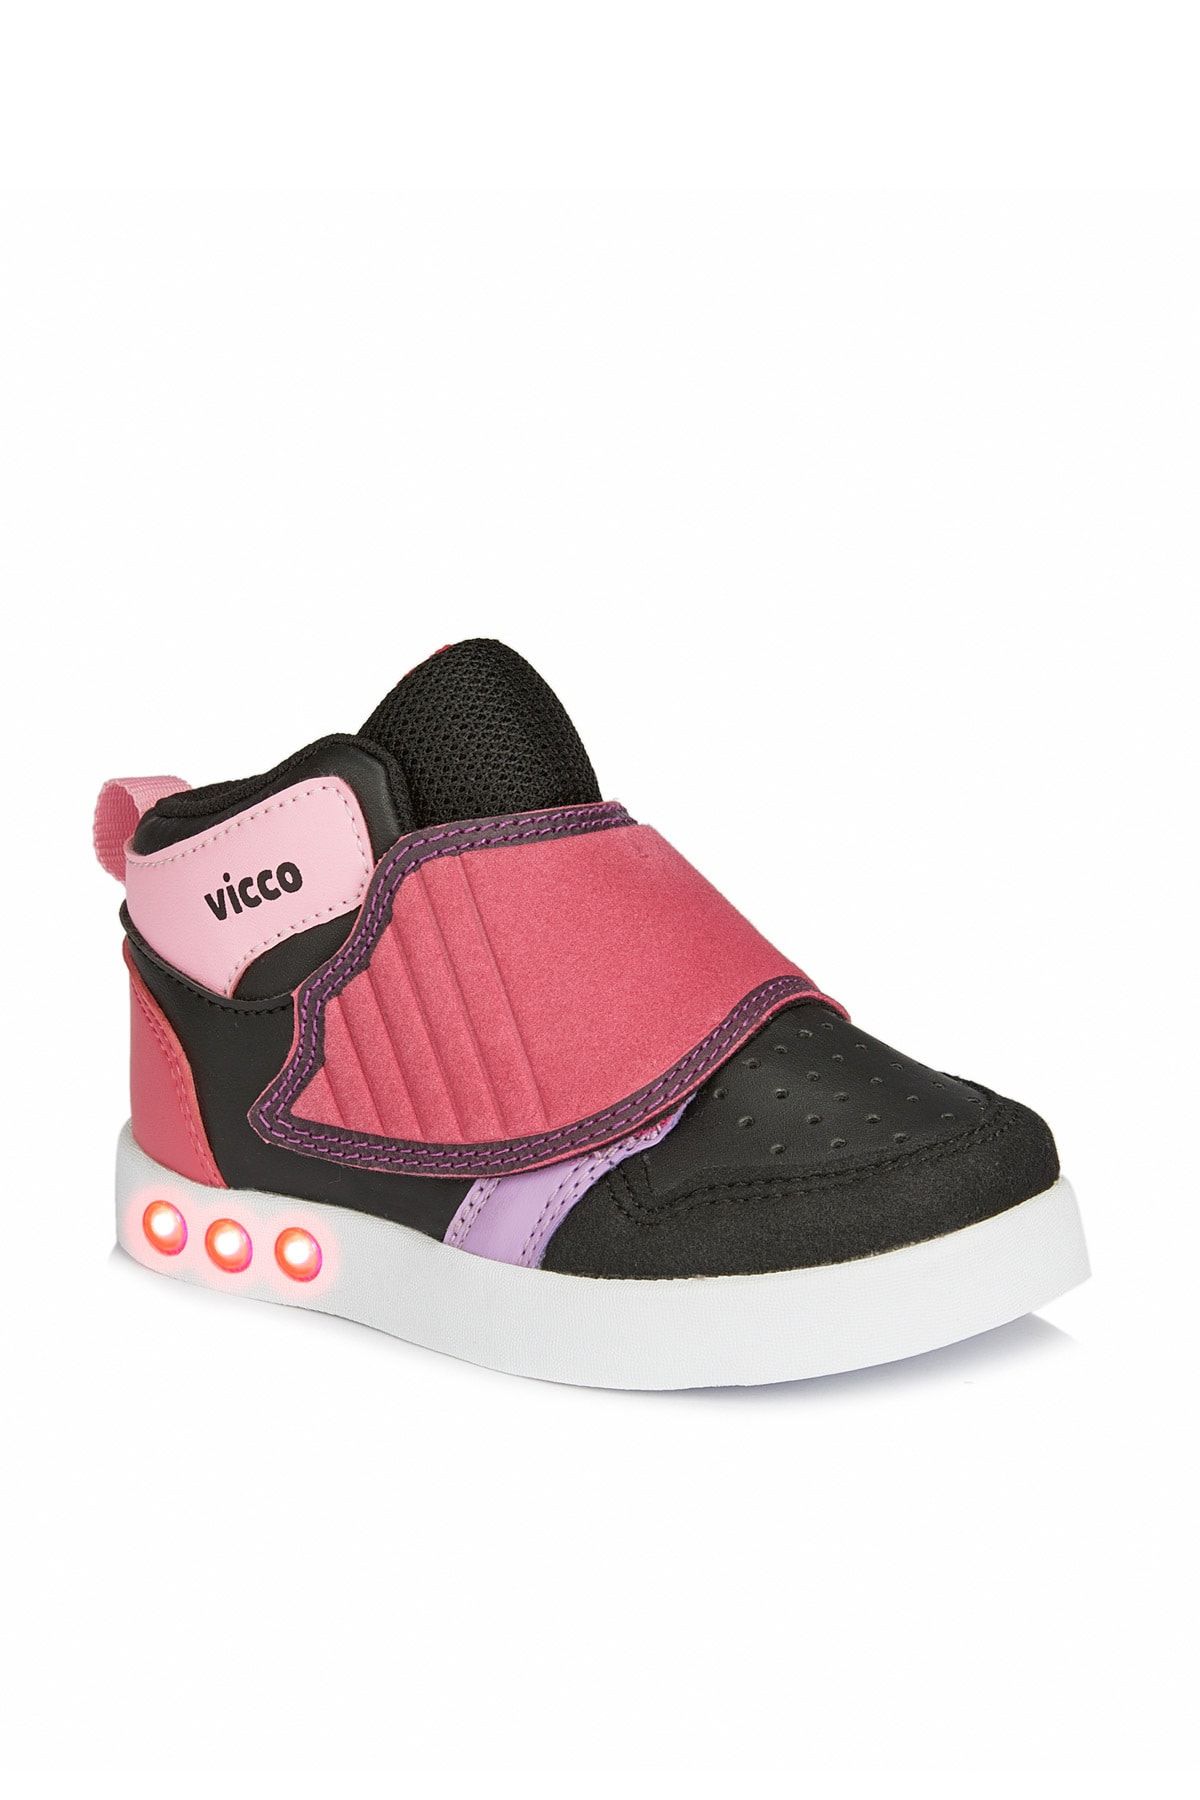 Vicco Ufo Kız Çocuk Siyah/Pembe Spor Ayakkabı Sneaker